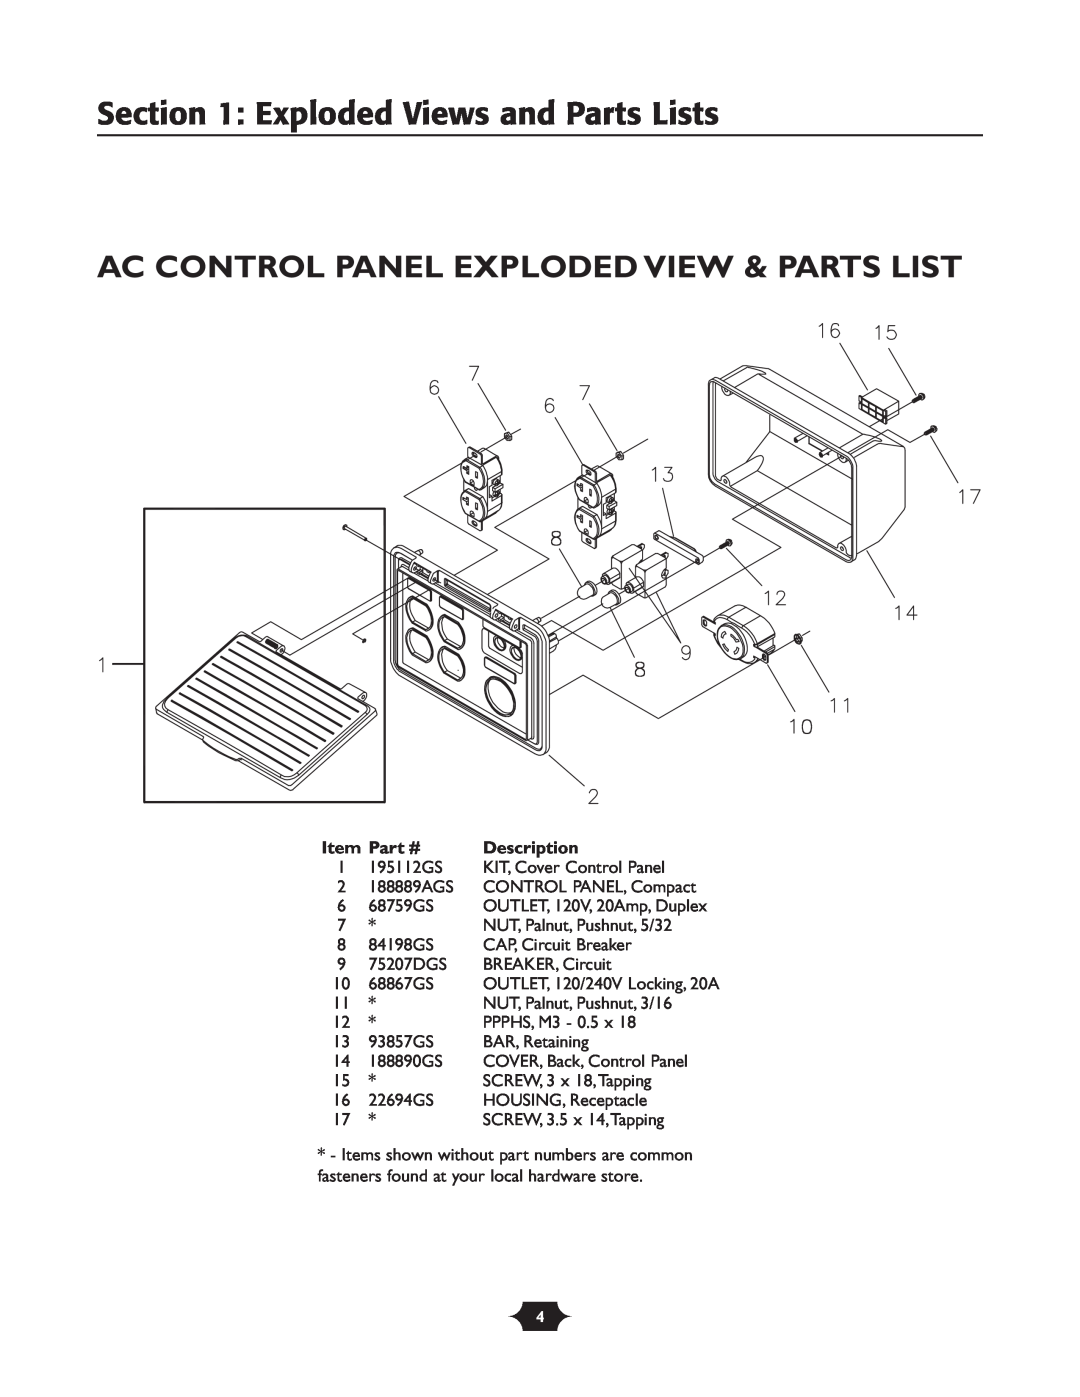 Troy-Bilt 1924 manual Ac Control Panel Exploded View & Parts List, Exploded Views and Parts Lists, Description 